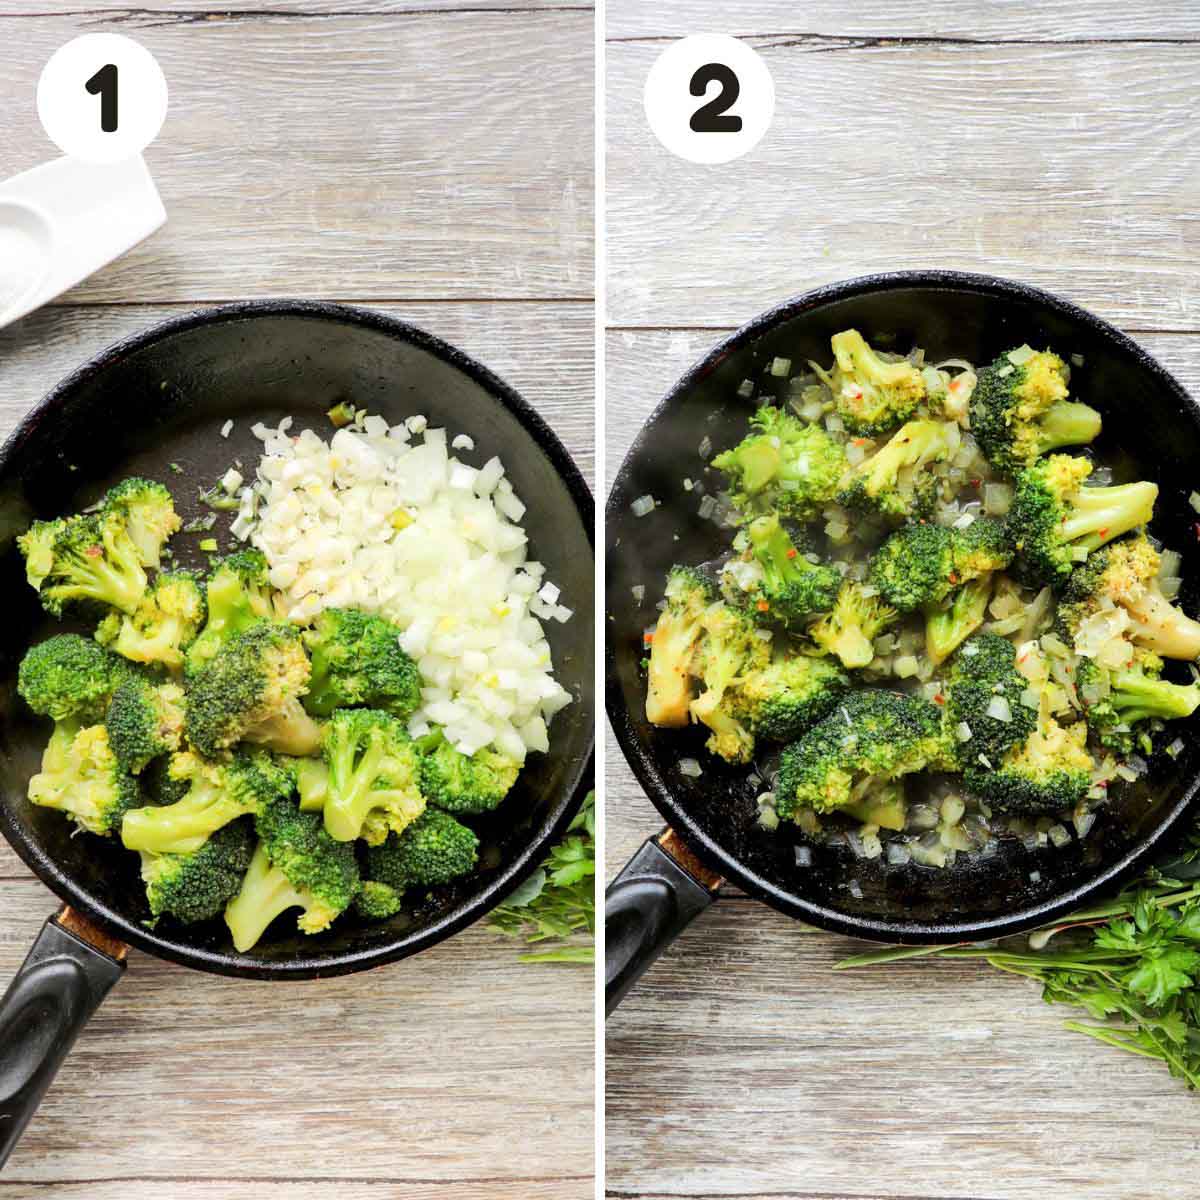 Steps to make the broccoli.